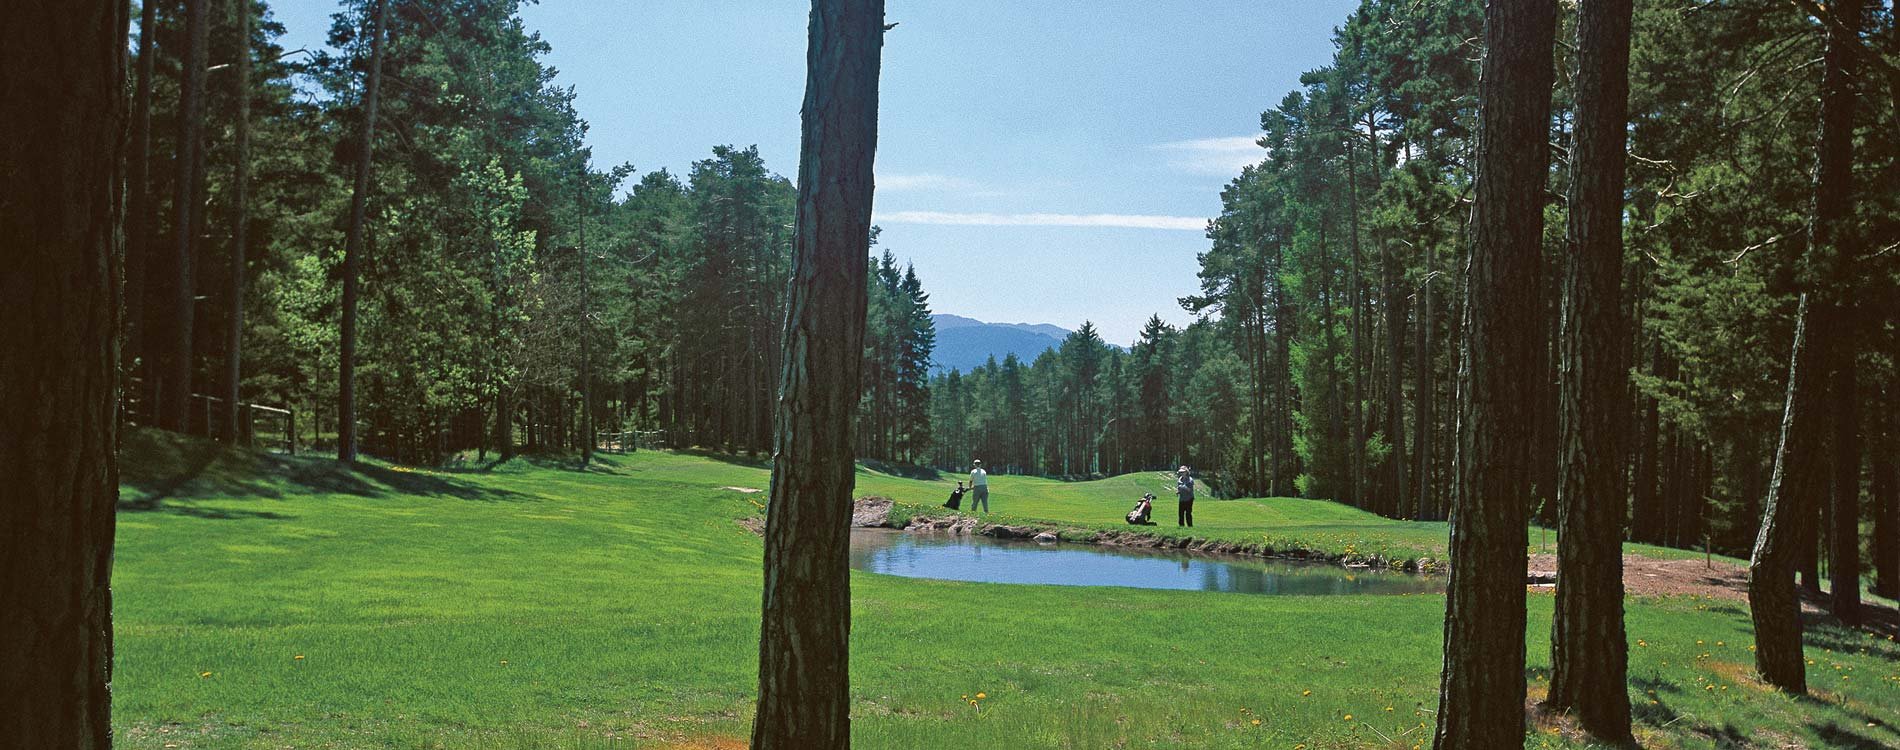 18-hole golf course 